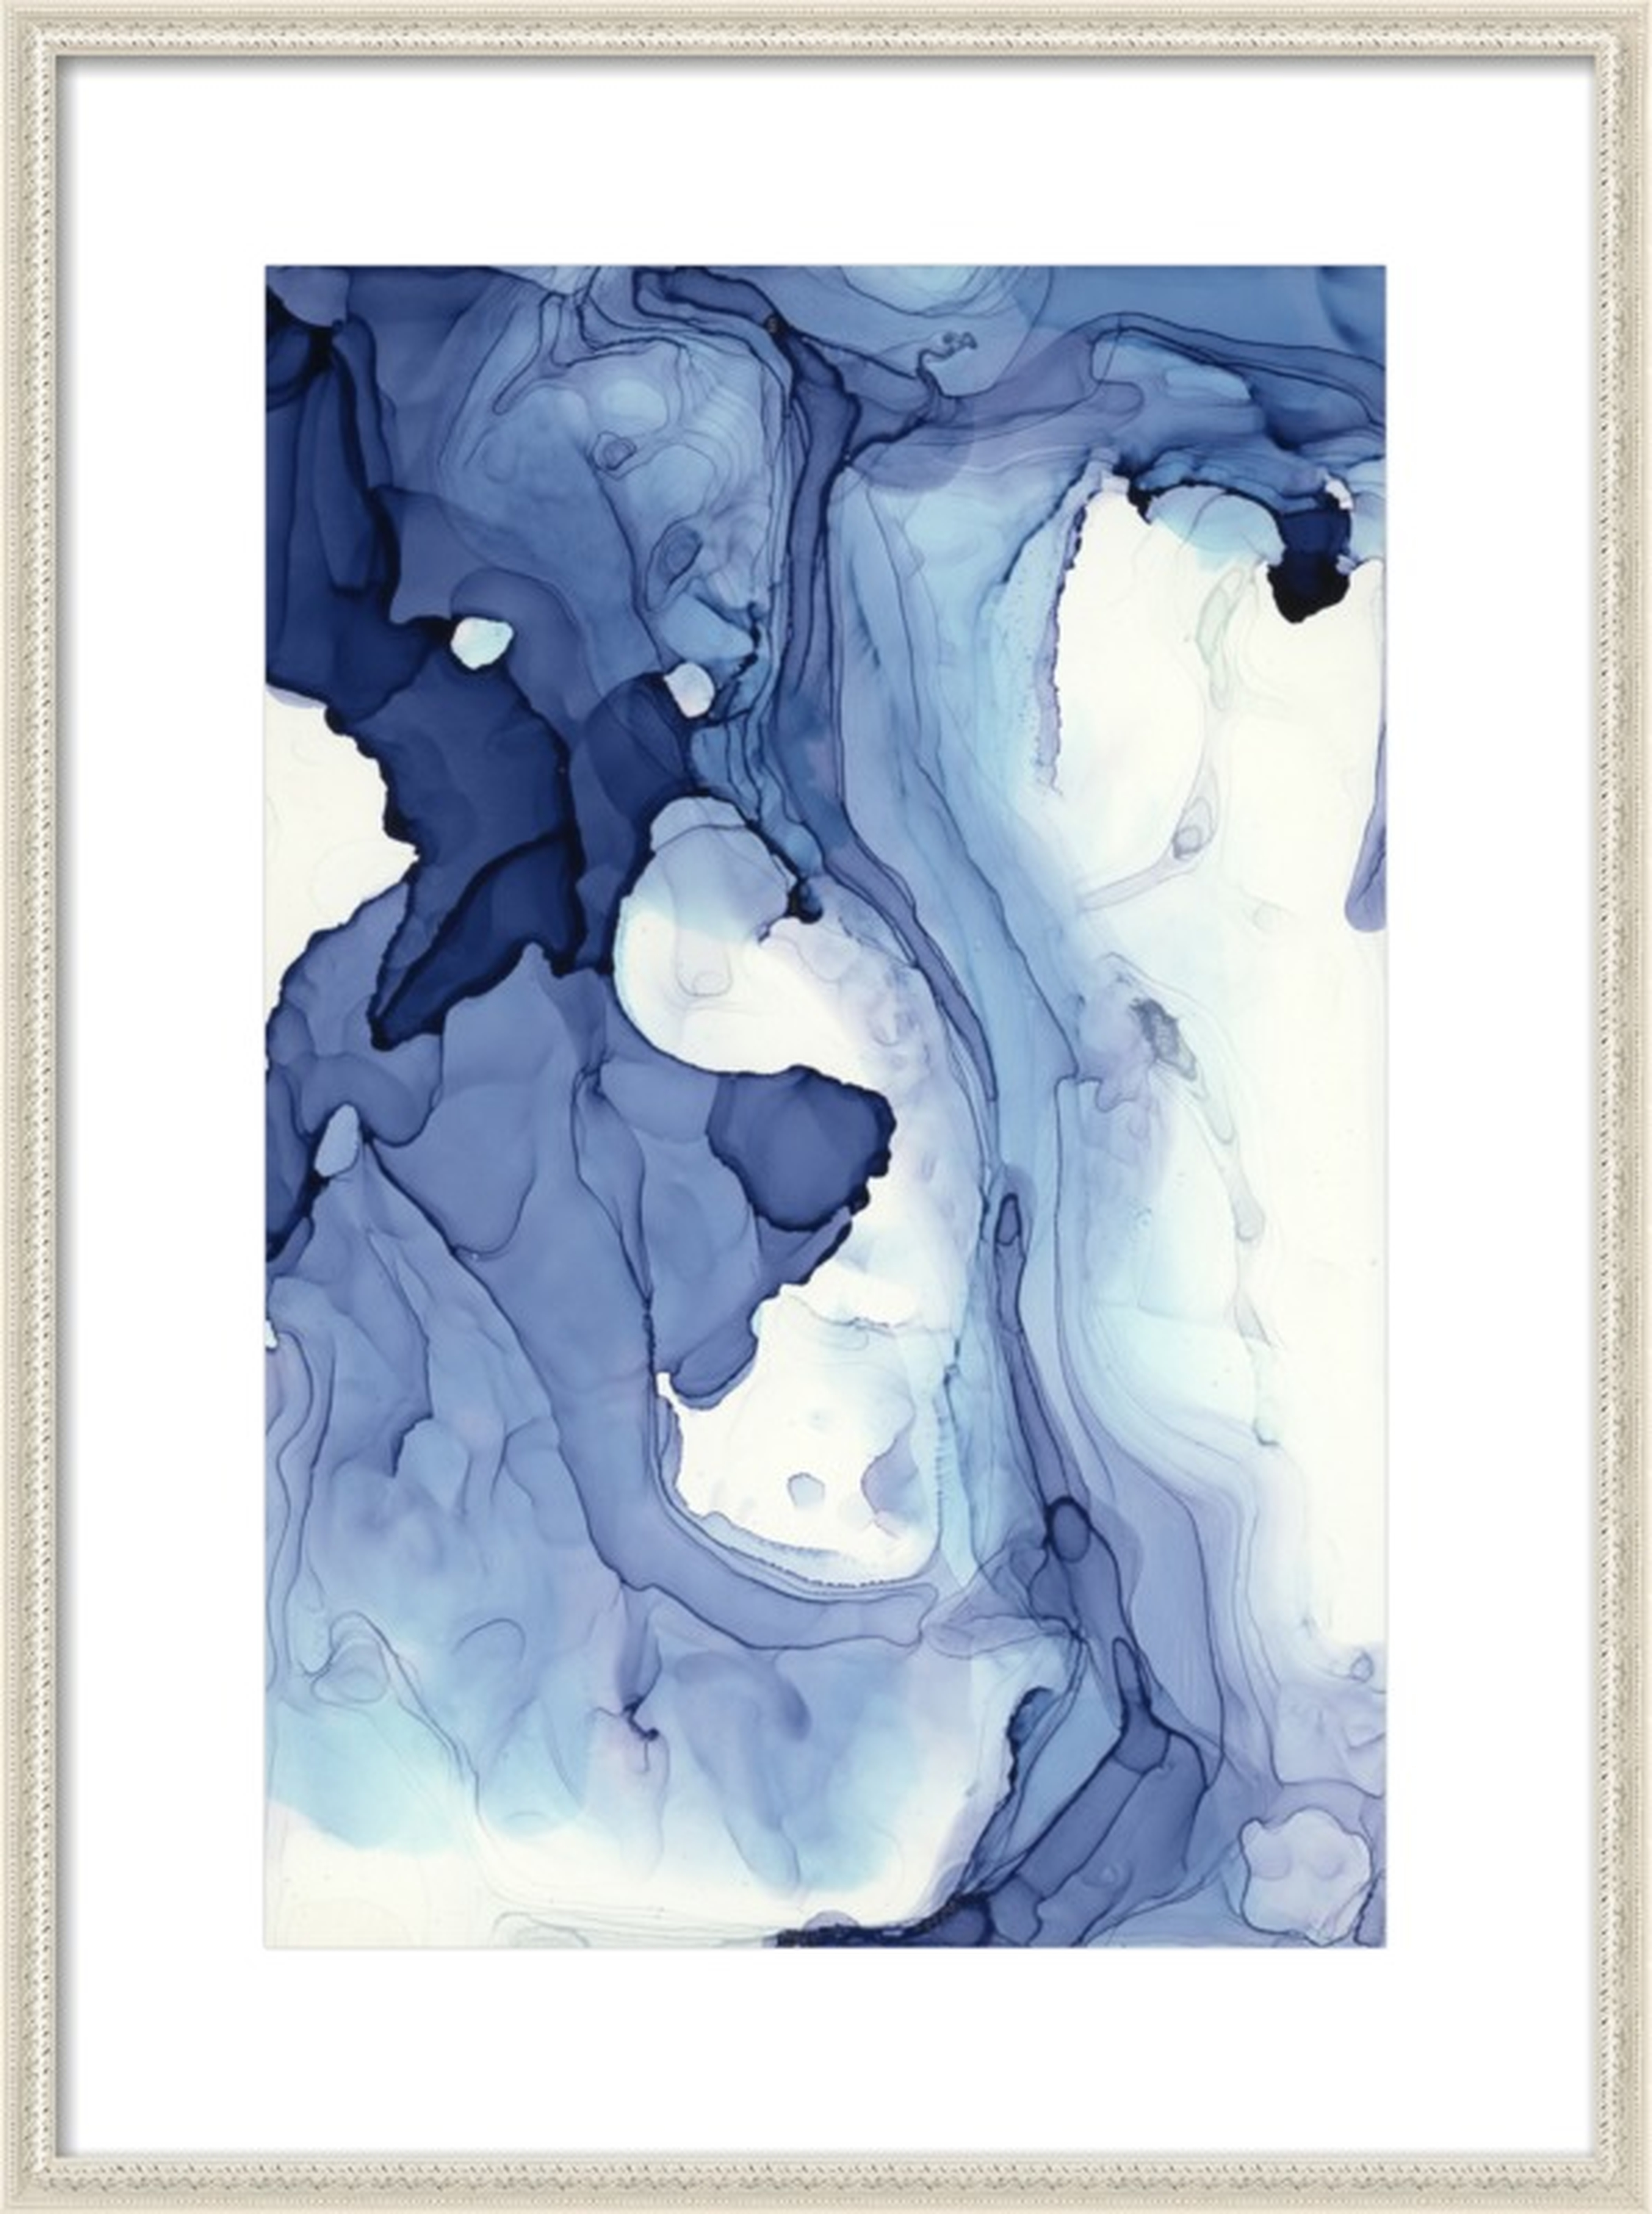 Blueline No. 4 by Andrea Pramuk for Artfully Walls - Artfully Walls